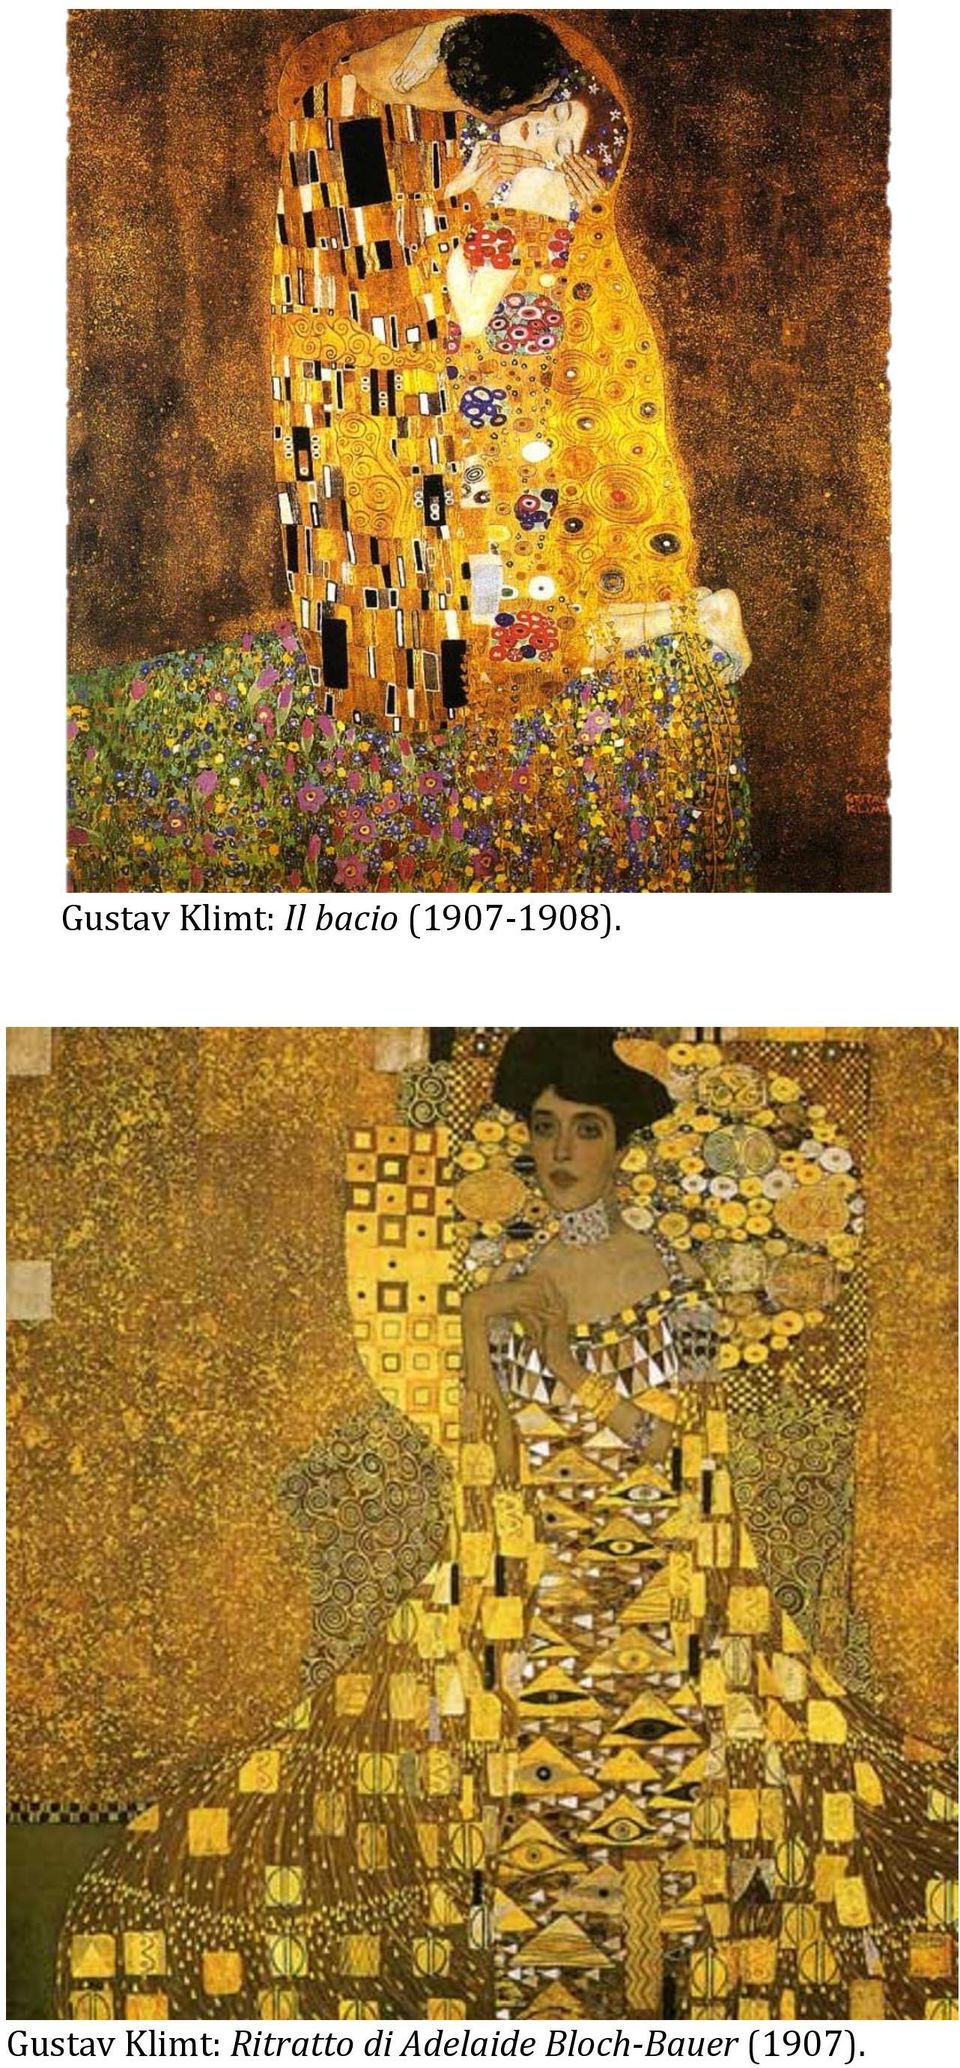 Gustav Klimt: Ritratto